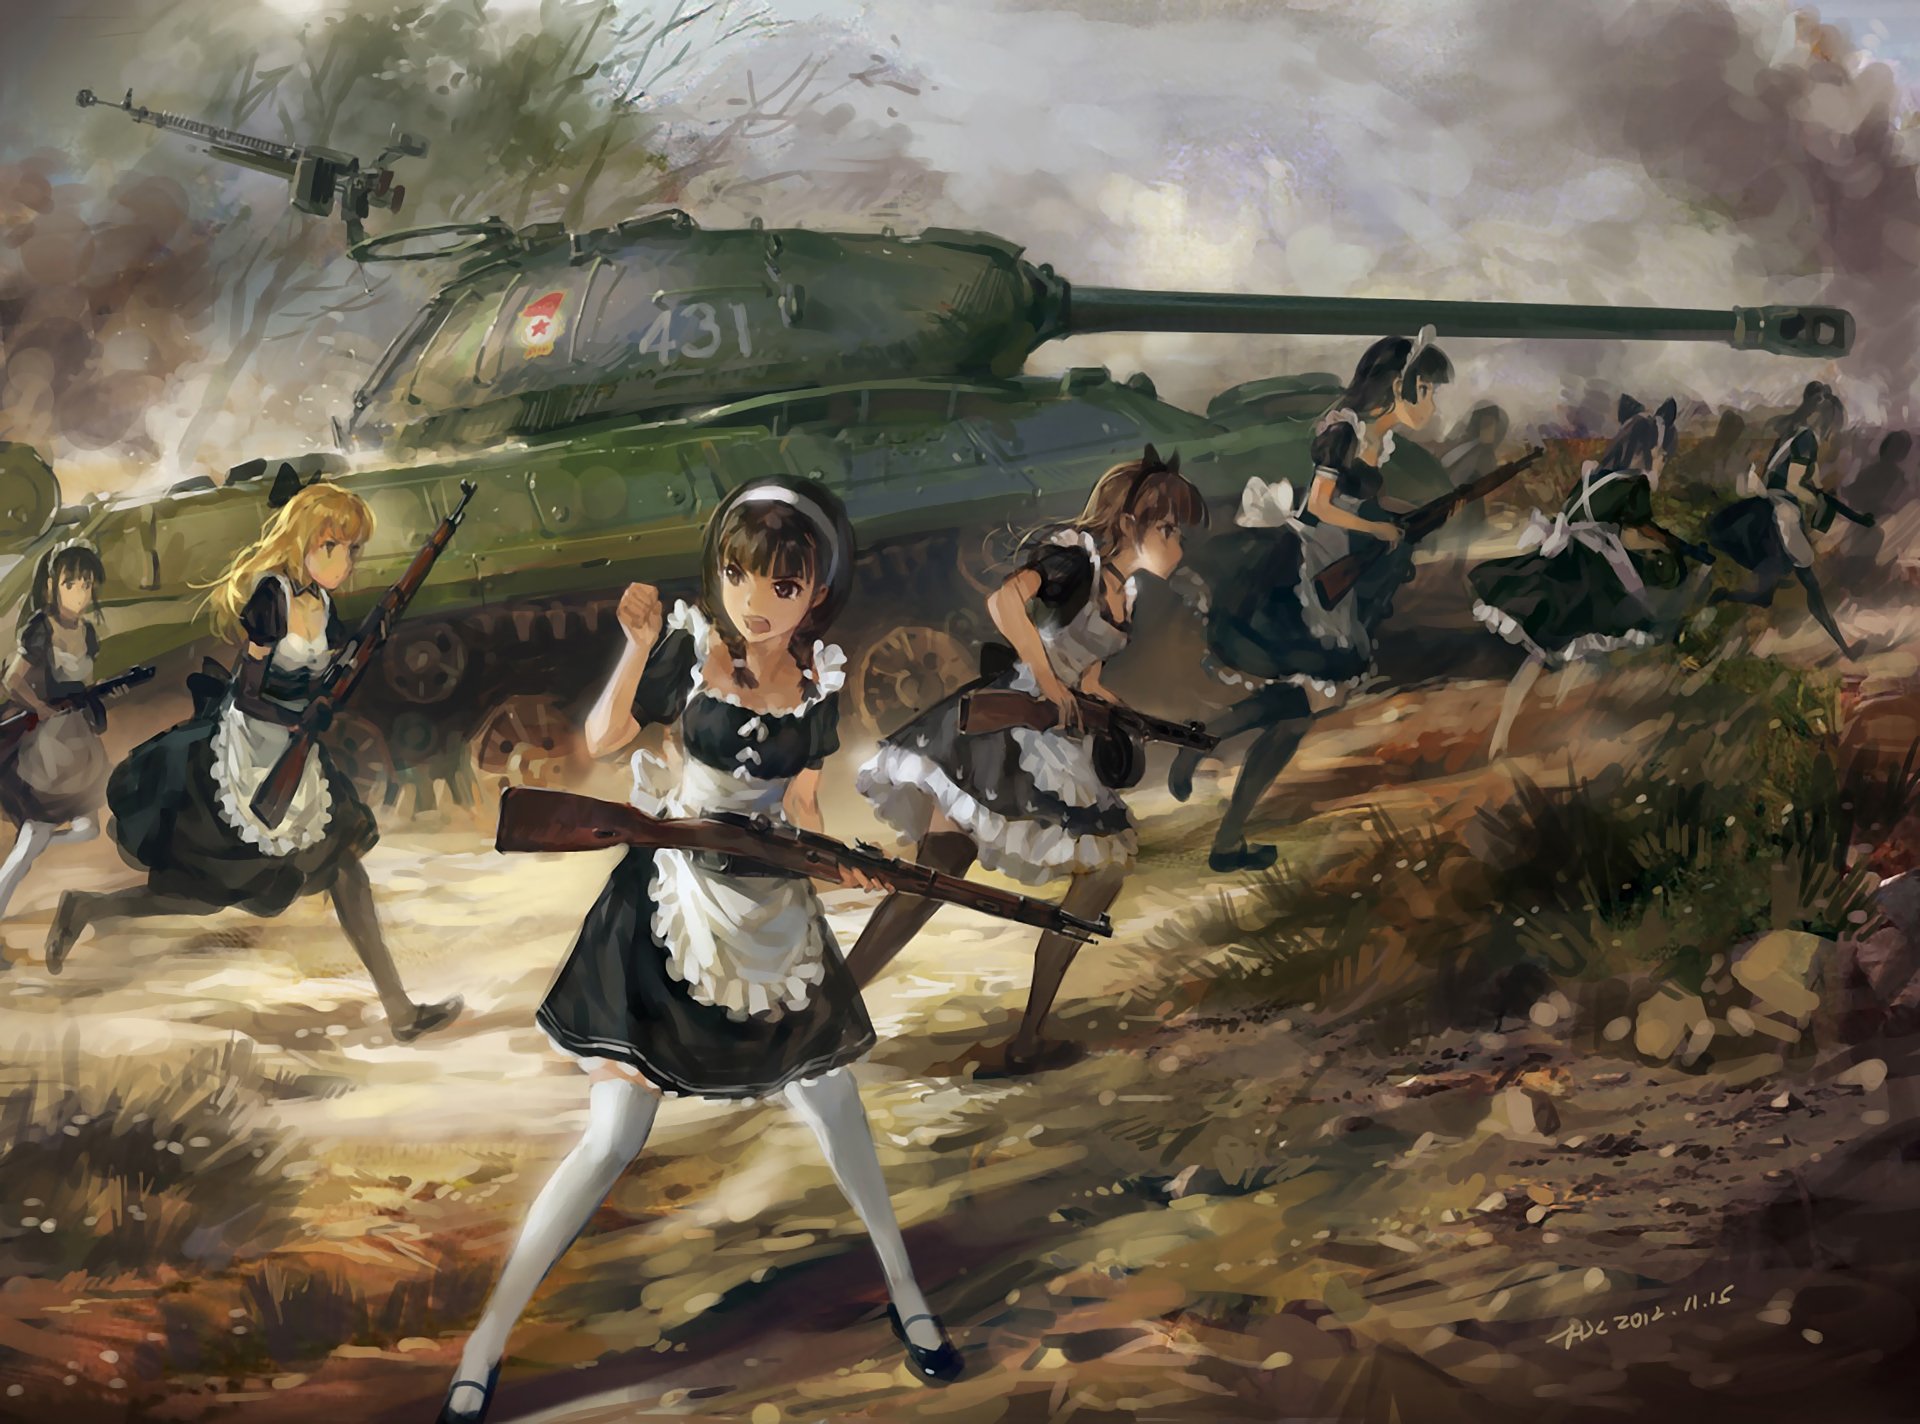 4546474 school uniform vehicle original characters anime girls tank  anime  Rare Gallery HD Wallpapers